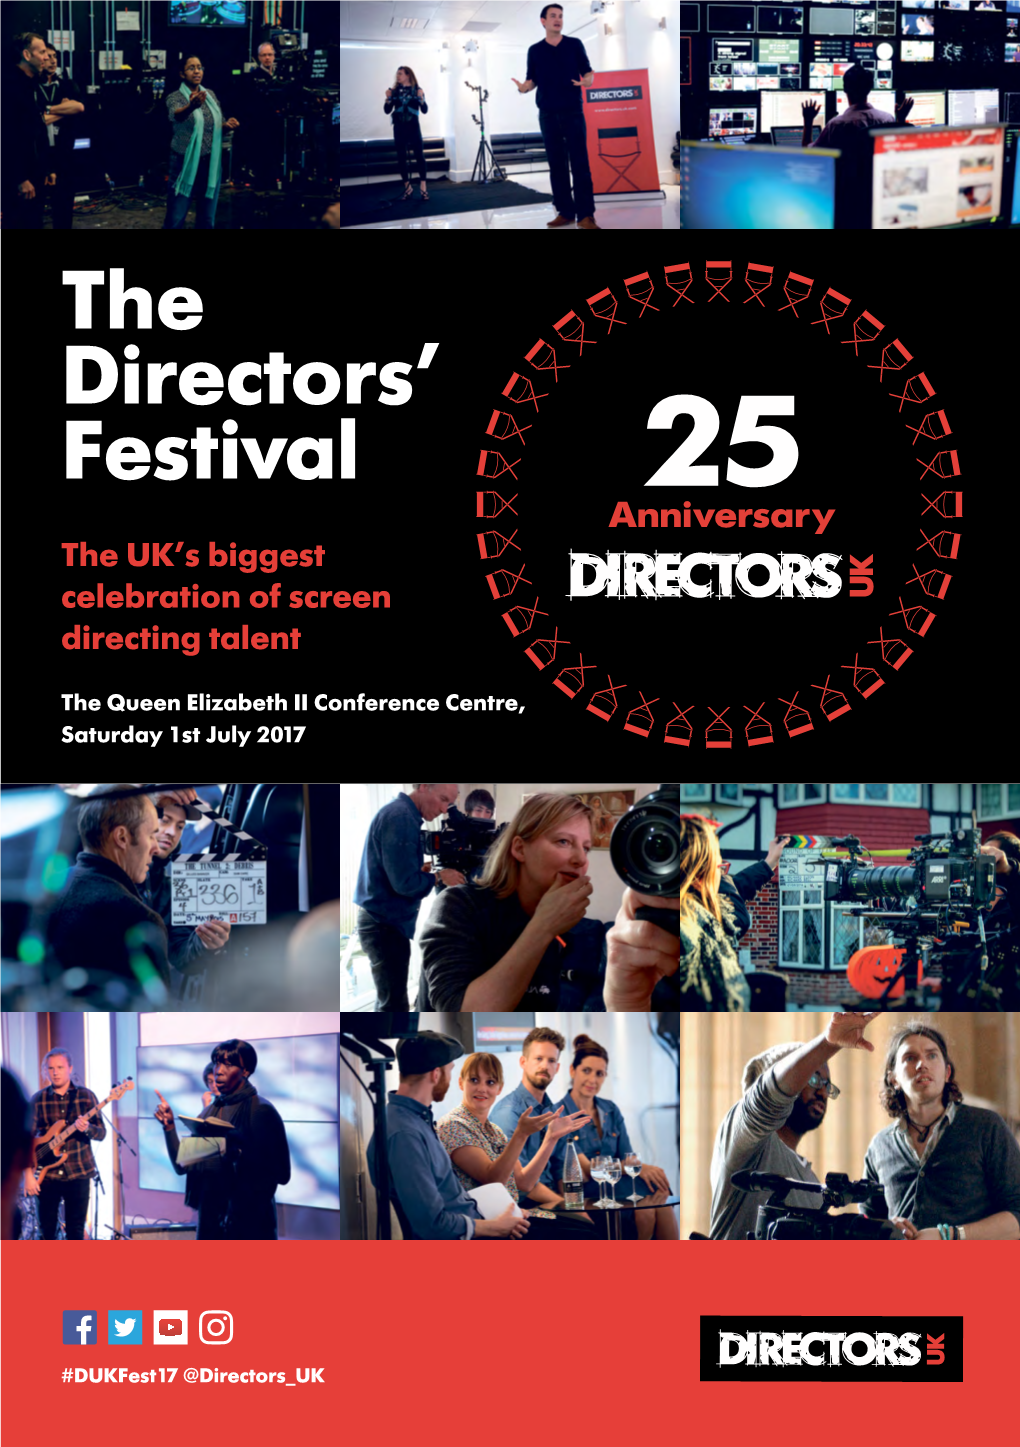 The Directors' Festival